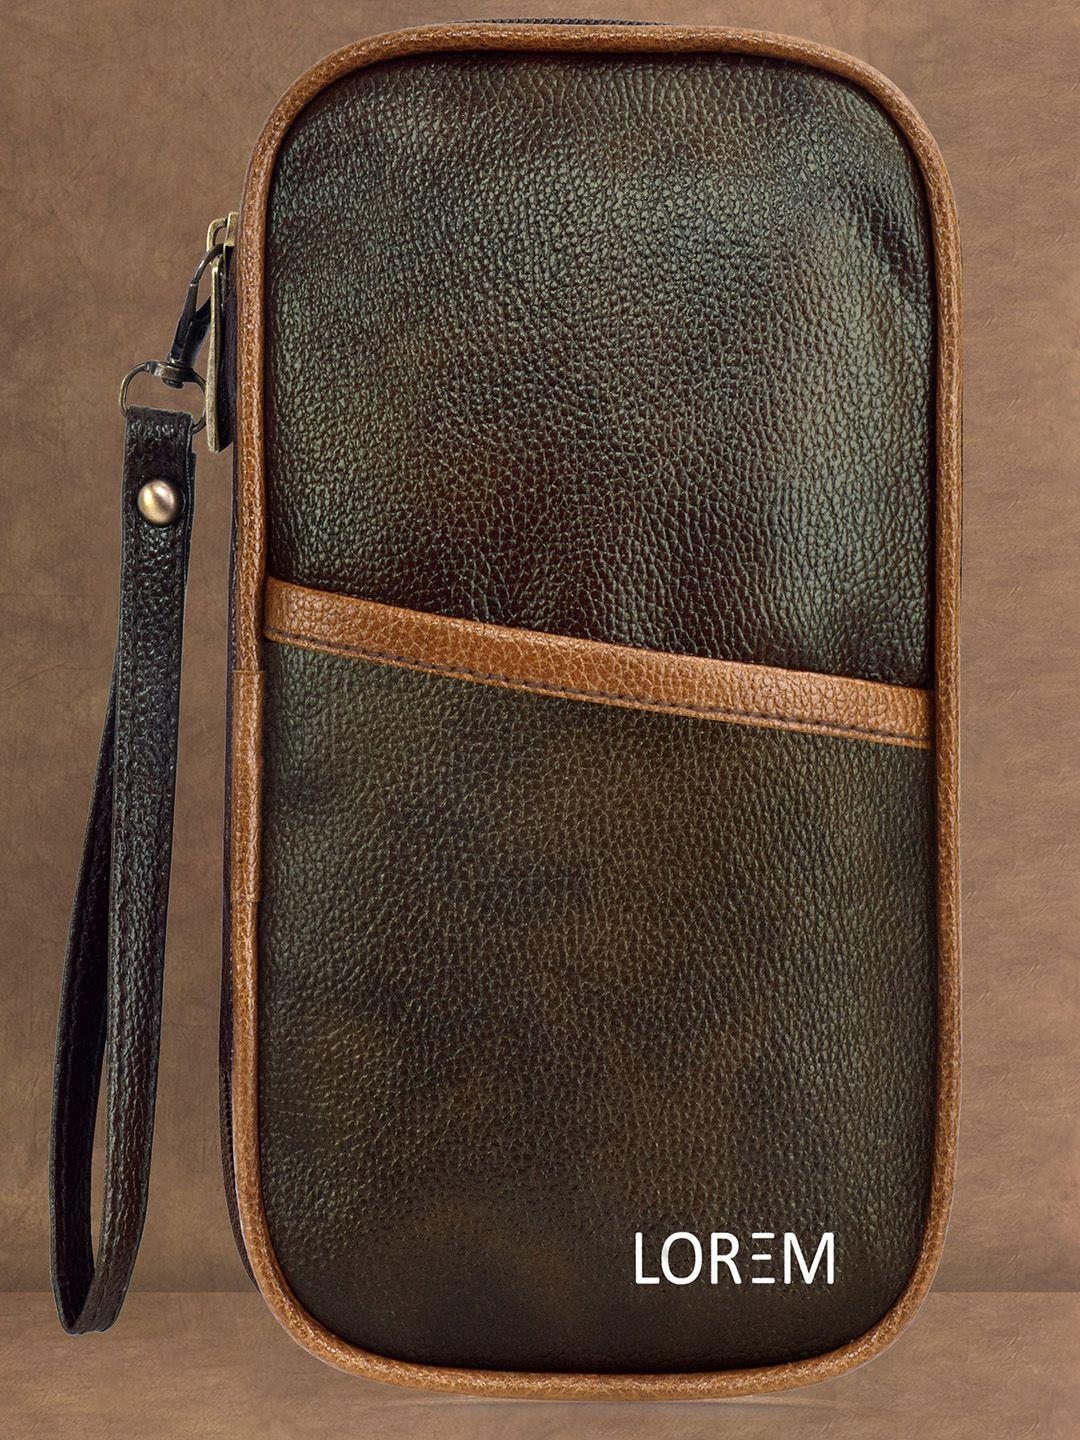 lorem document organizer durable travel bag